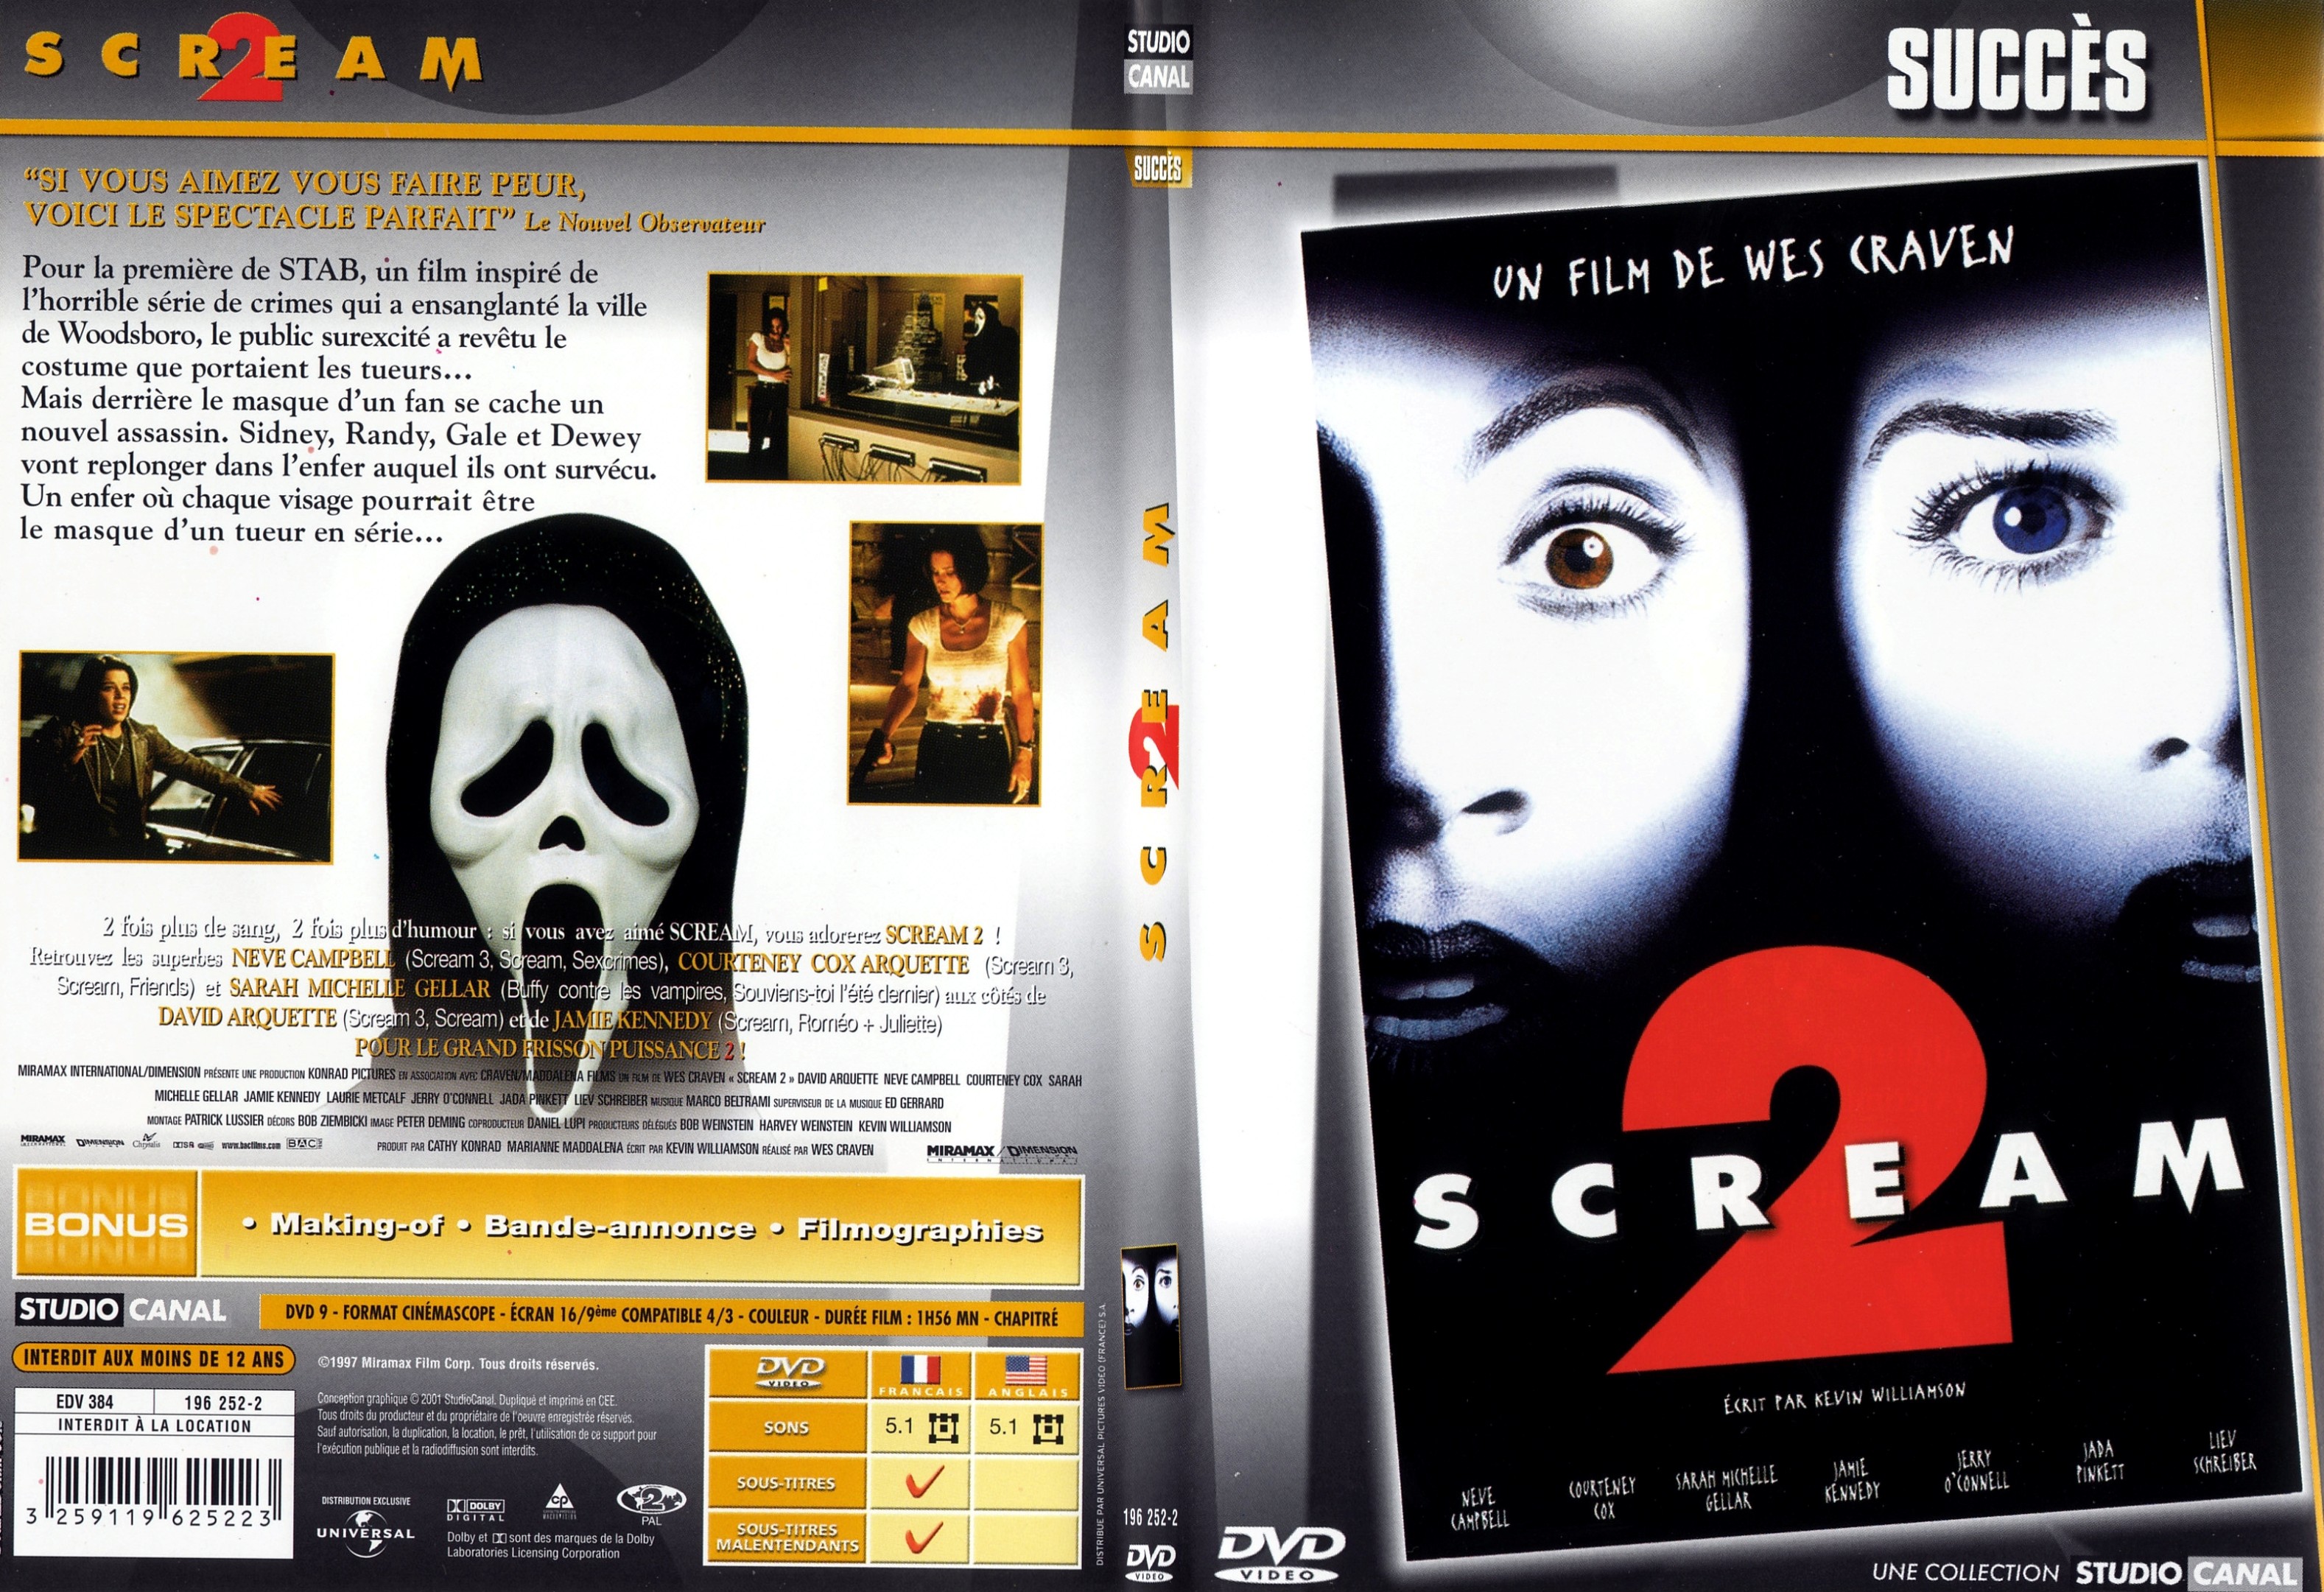 Jaquette DVD Scream 2 - SLIM v2